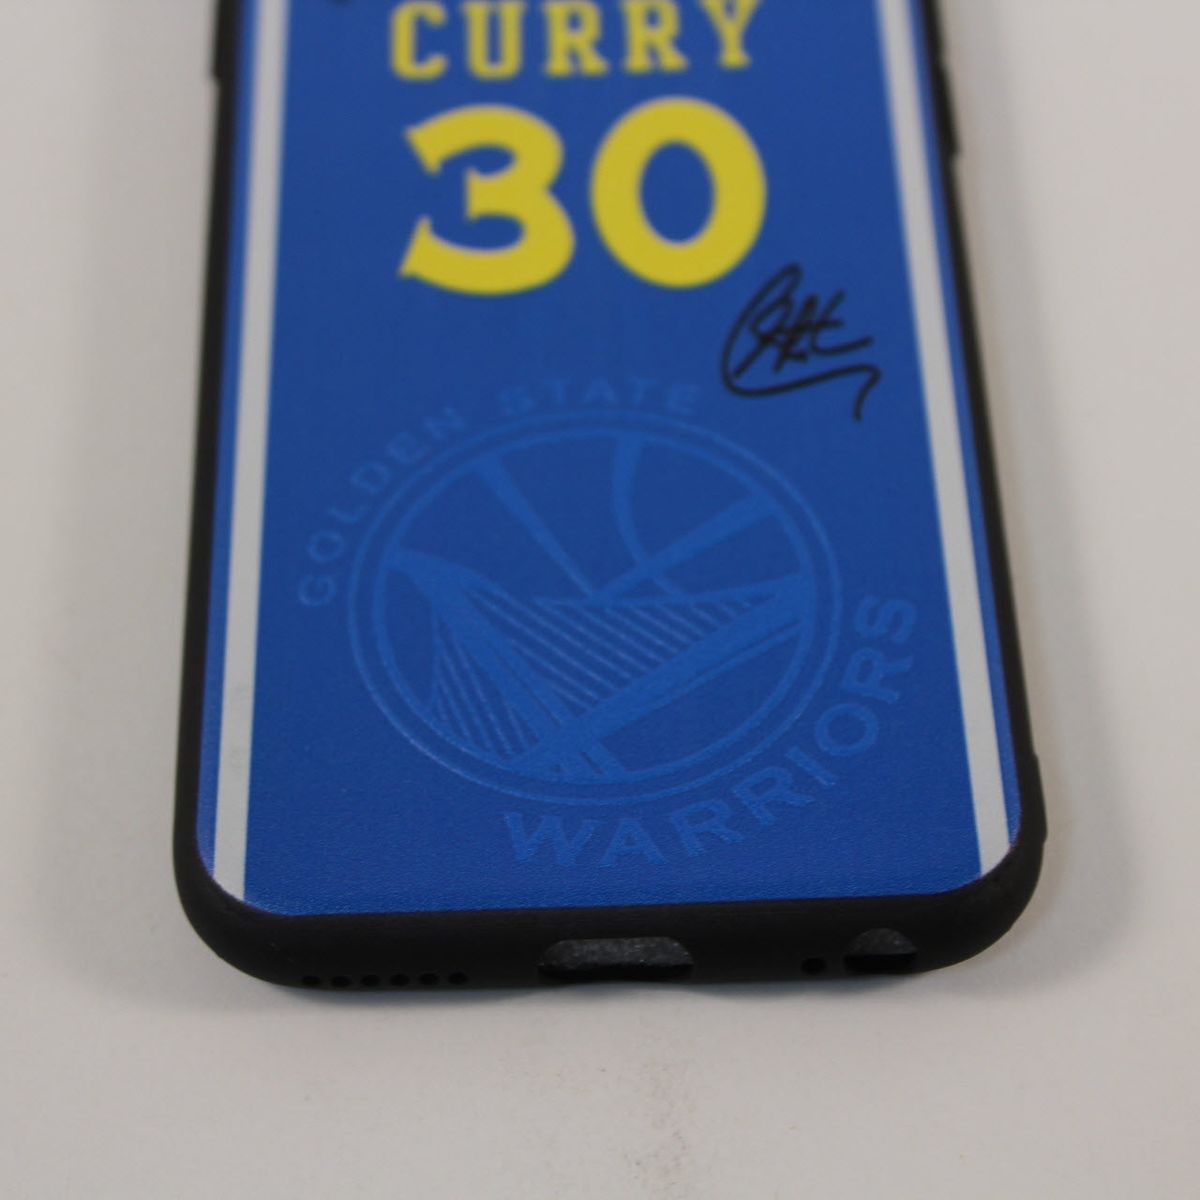 Чохол для iPhone Stephen Curry (Golden State Warriors), iPhone 6/6s